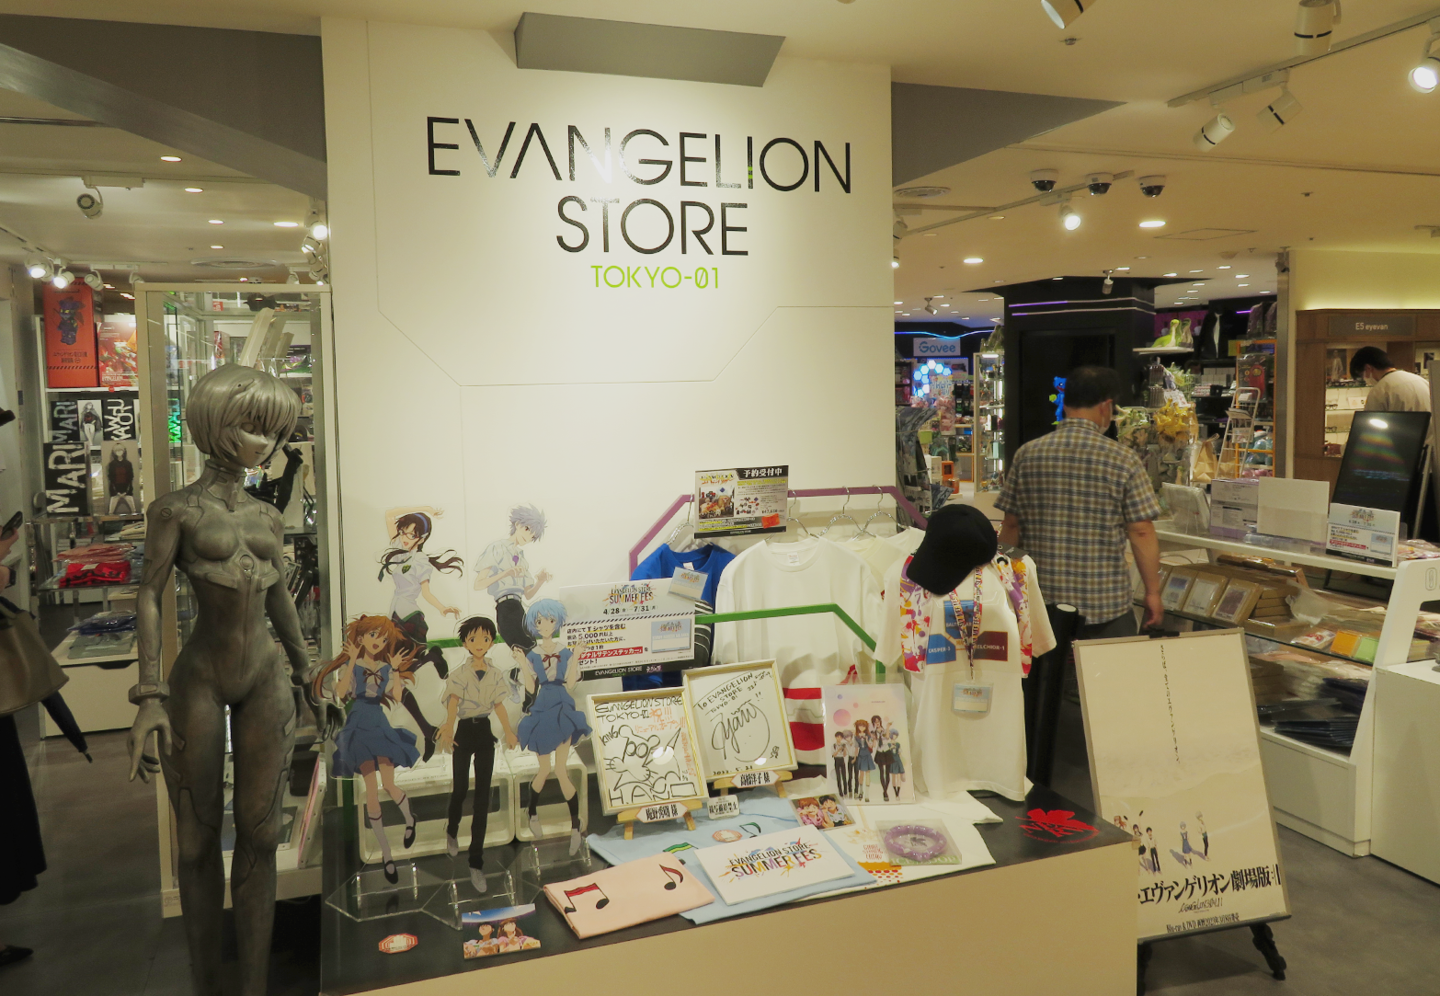 Interior images of the Evangelion Store Tokyo located in Ikebukuro, Tokyo